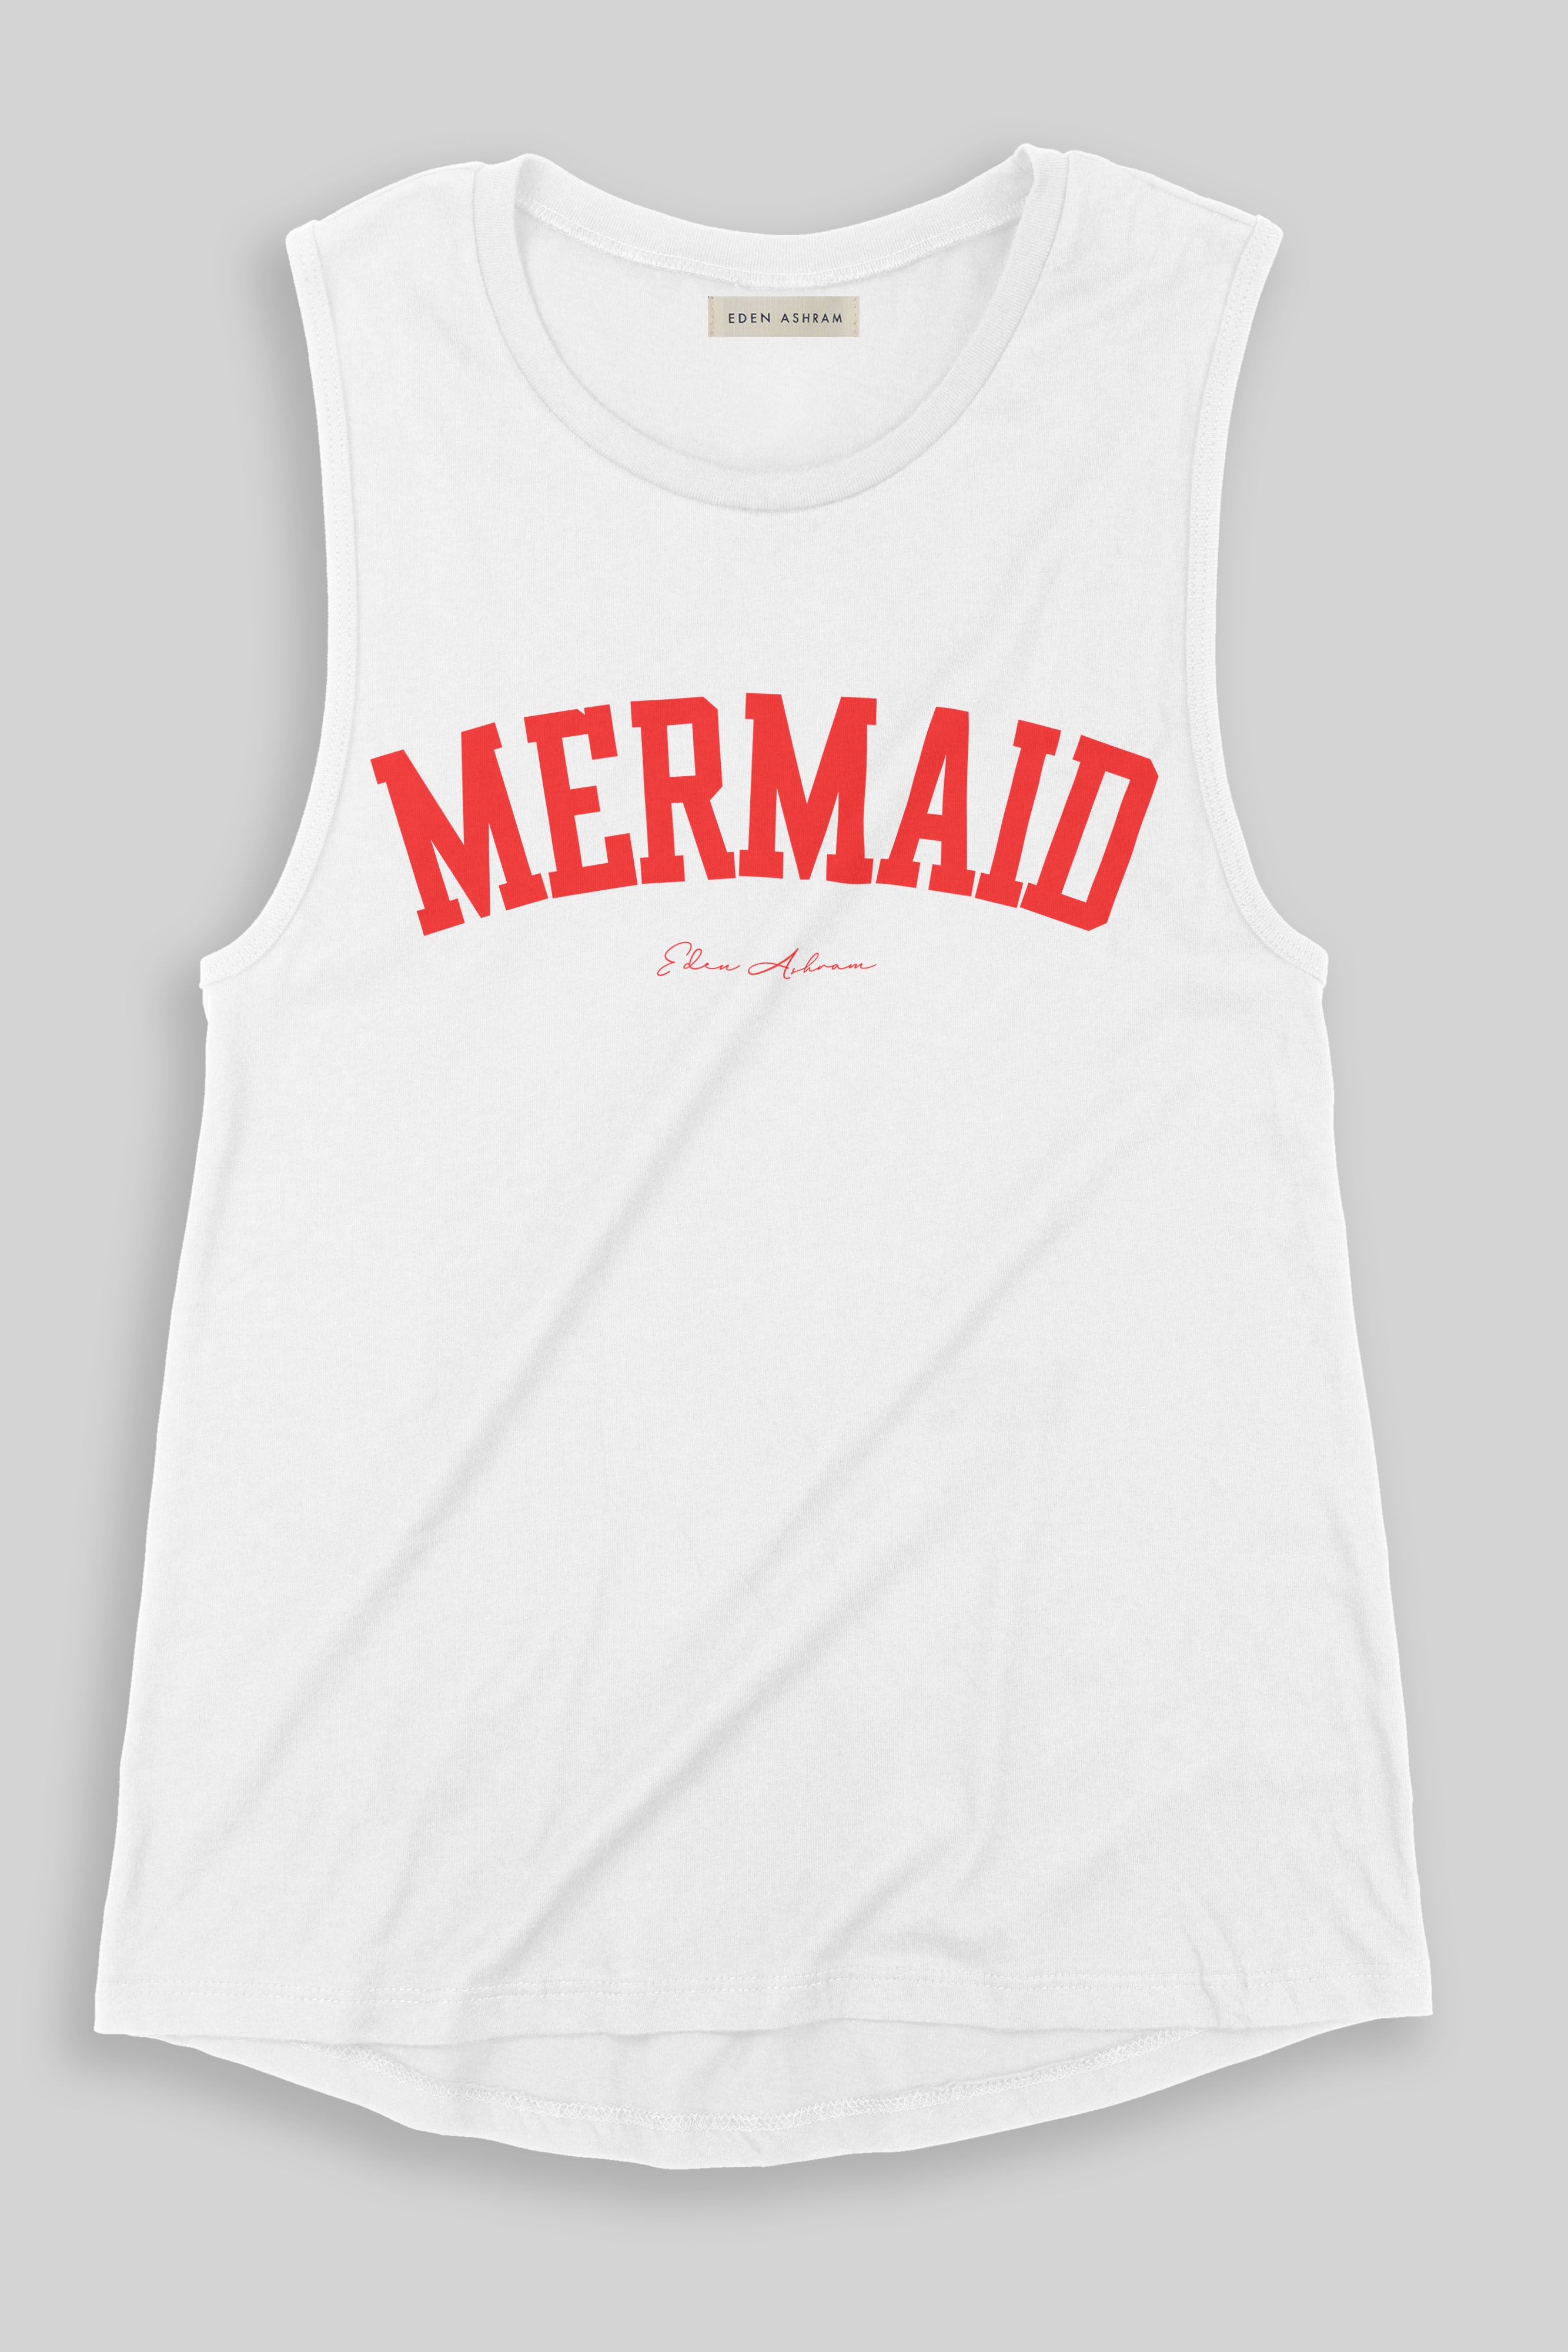 EDEN ASHRAM Mermaid Premium Jersey Muscle Tank Vintage White